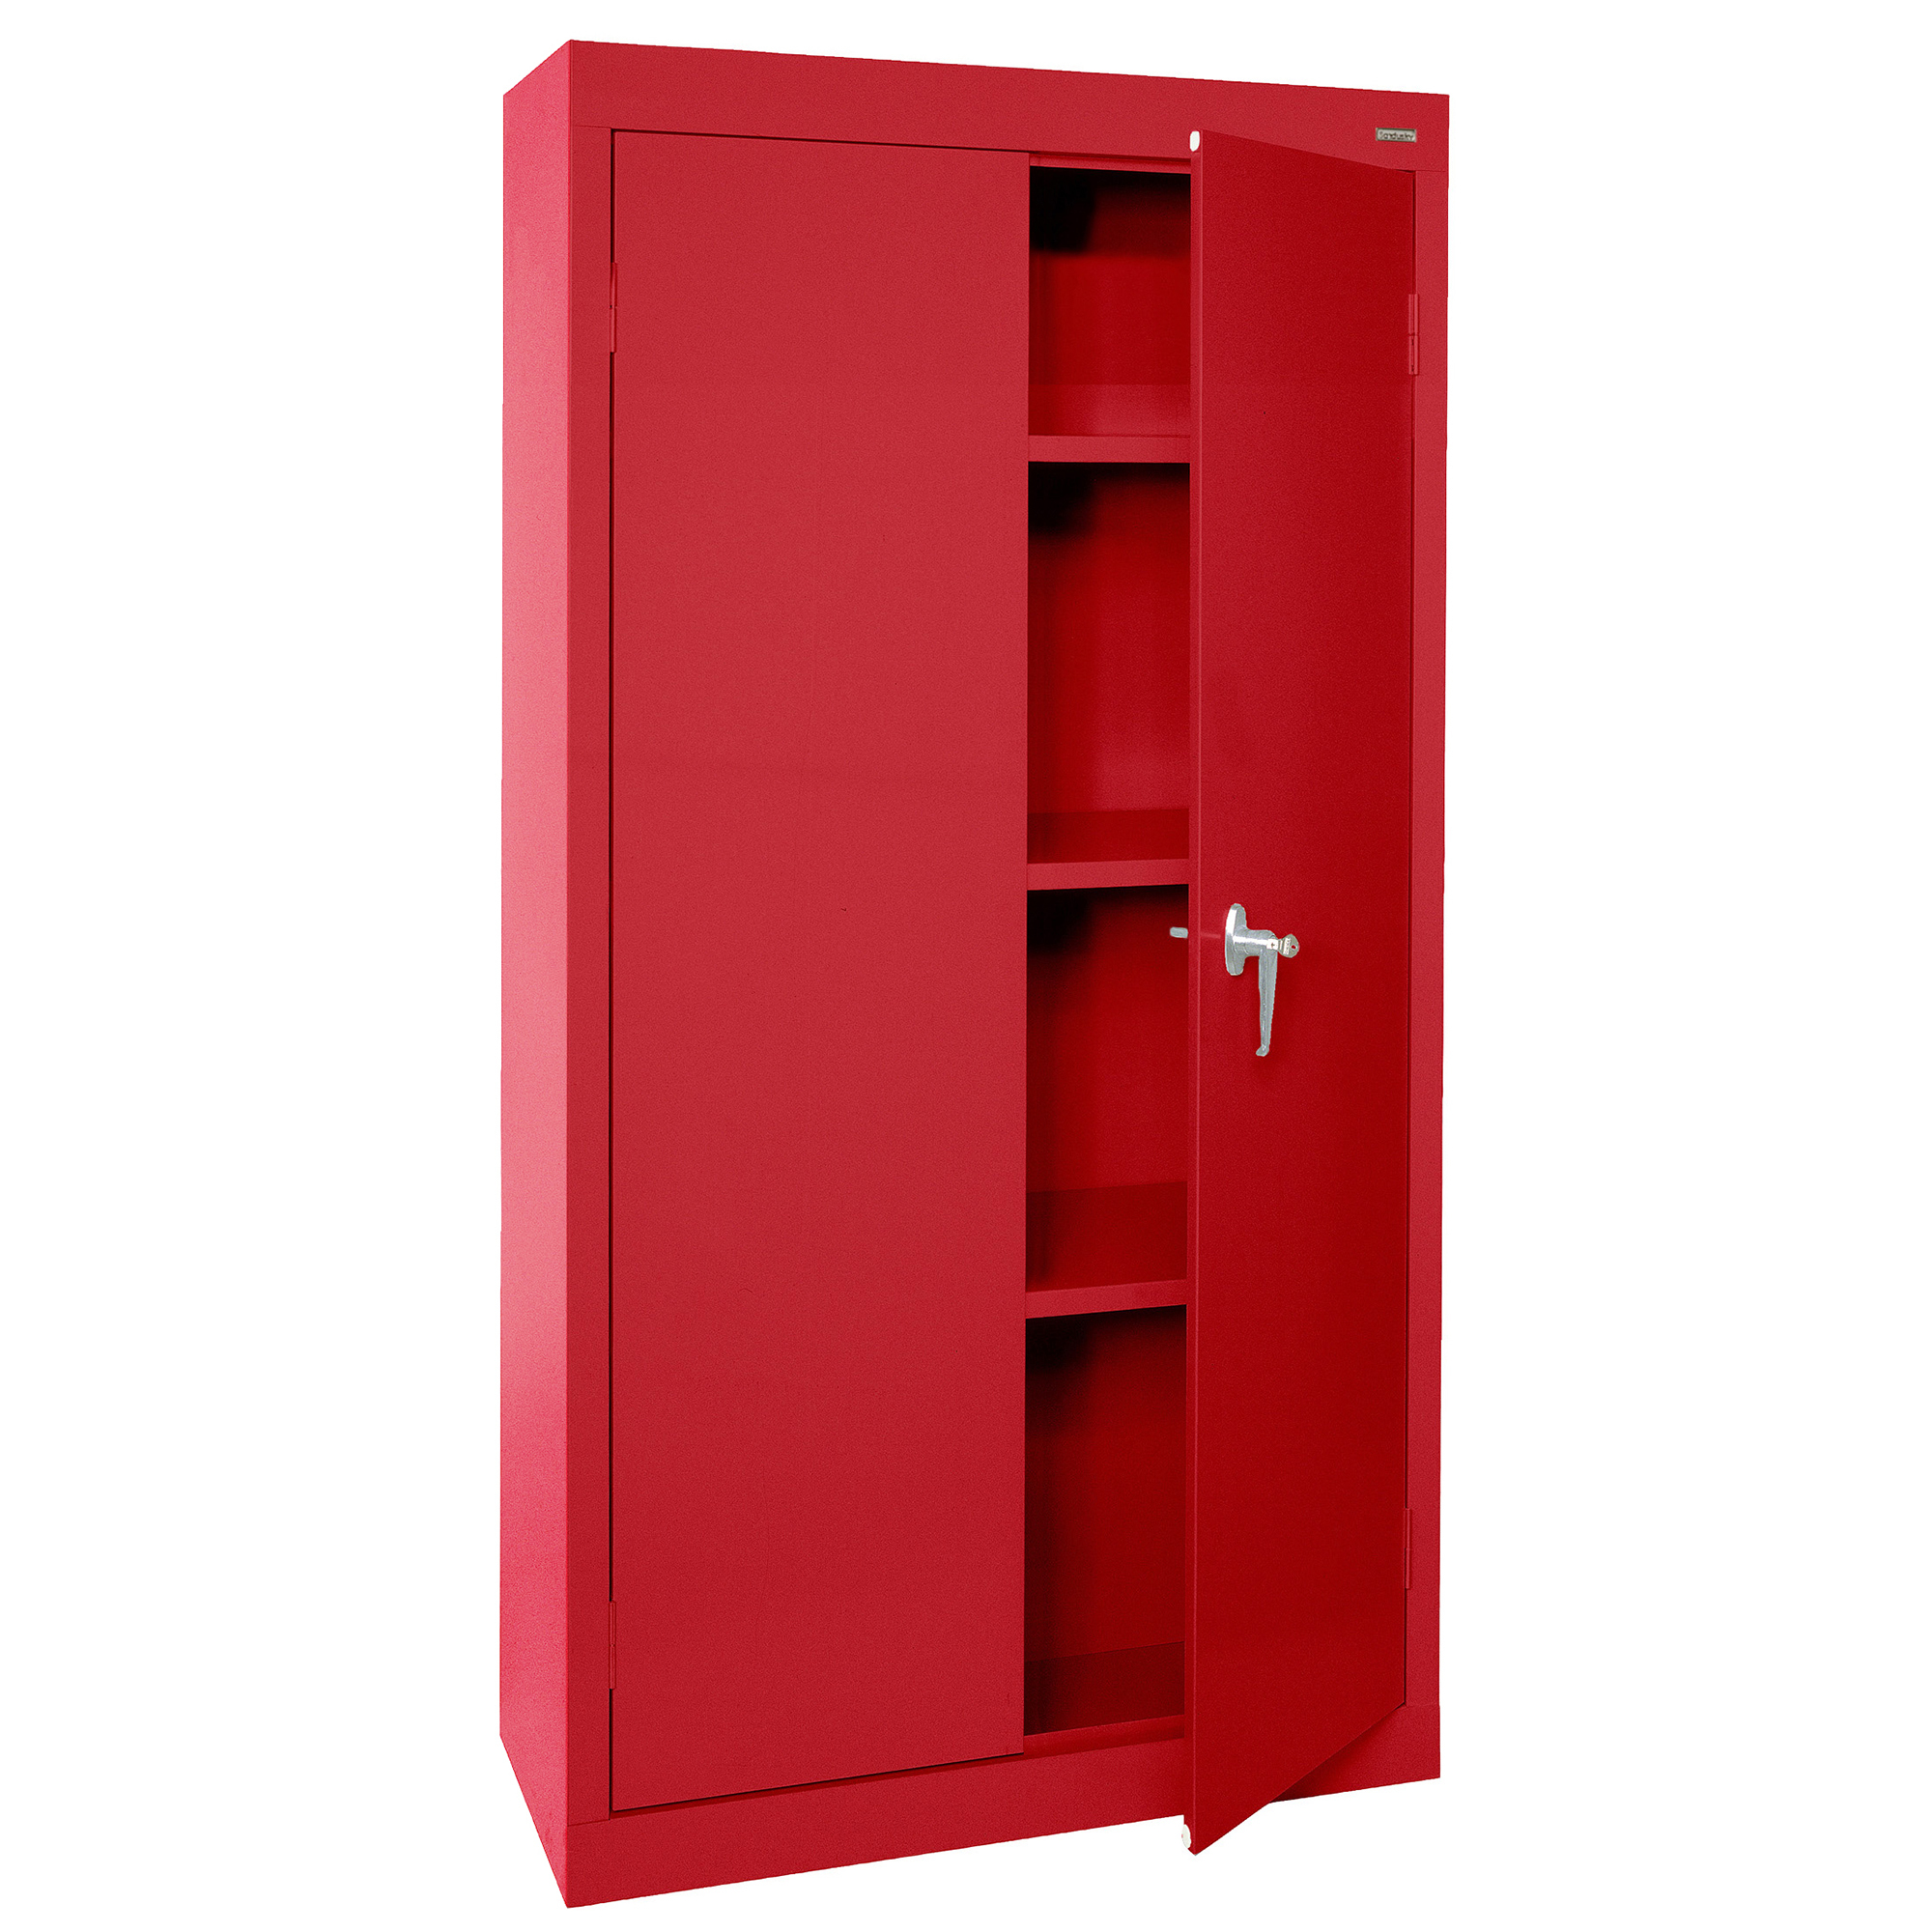 Sandusky Lee Sandusky, Value Line Cabinet 30x18x66 Red, Height 66 in, Width 30 in, Color Red, Model VF31301866-01